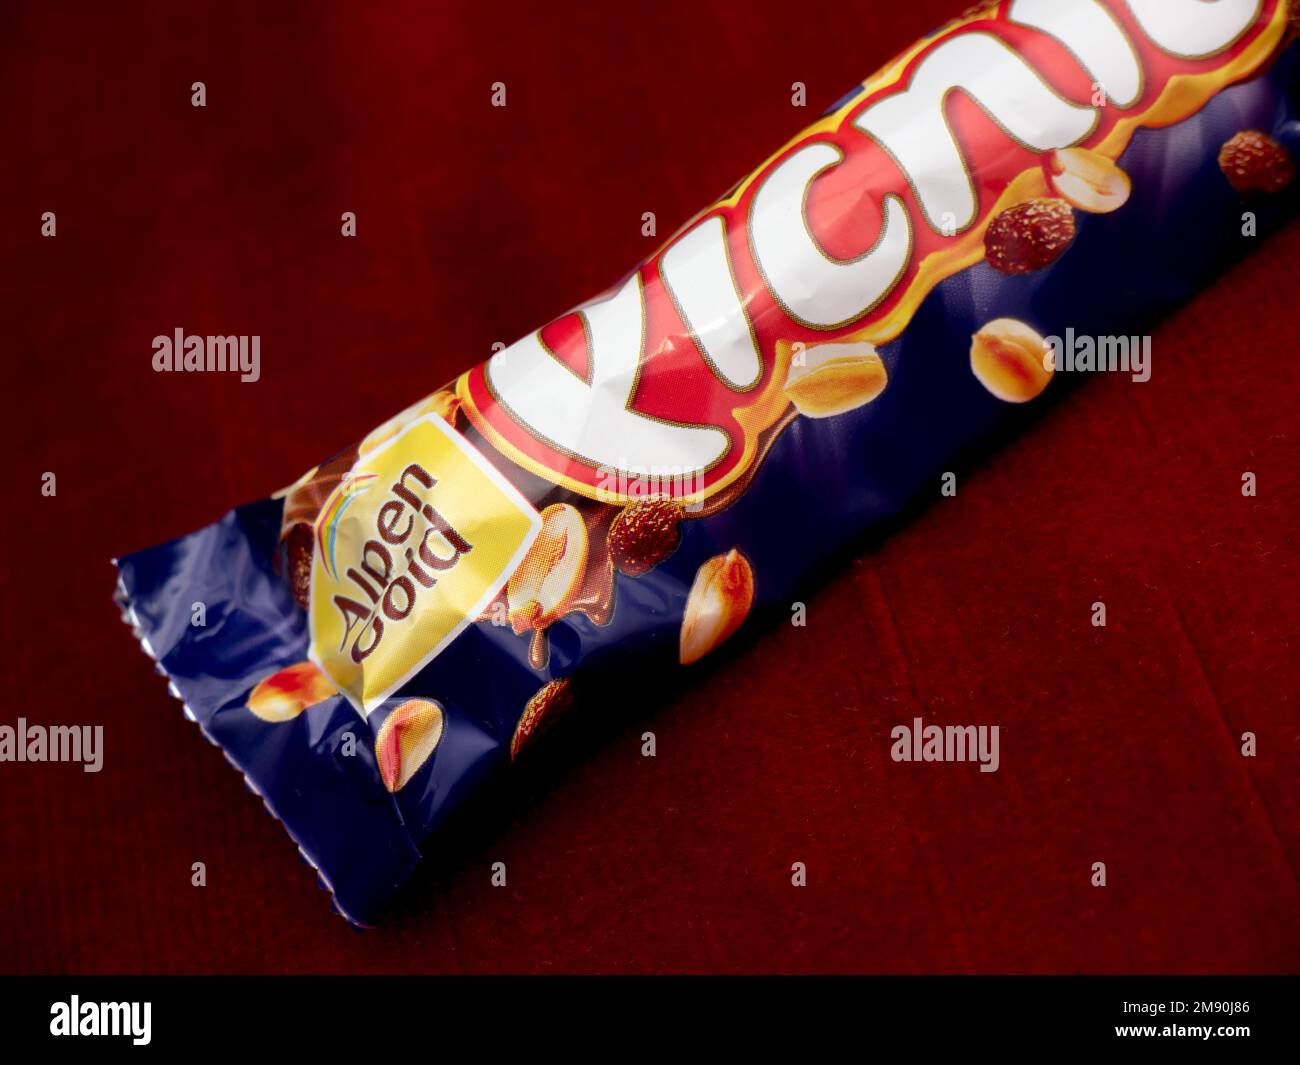 Cadbury's Wispa Bar Gold edition Stock Photo - Alamy